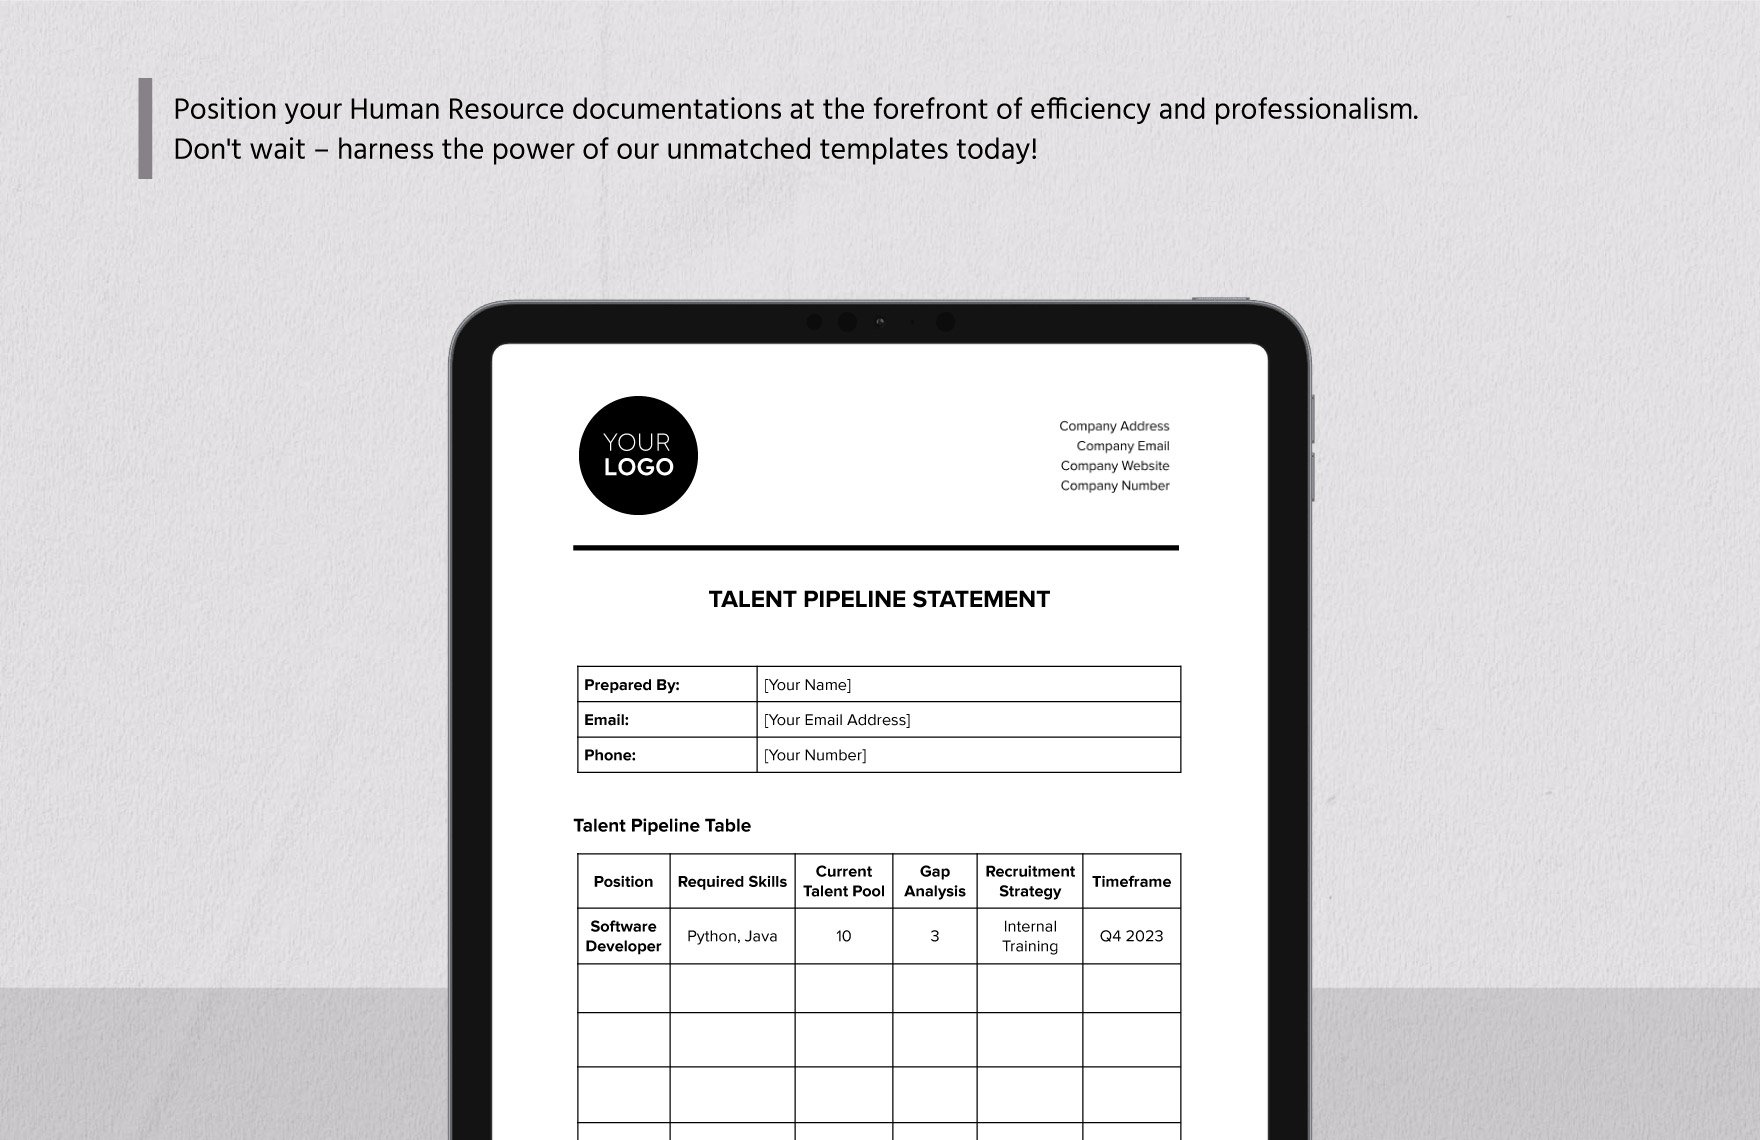 Talent Pipeline Statement HR Template